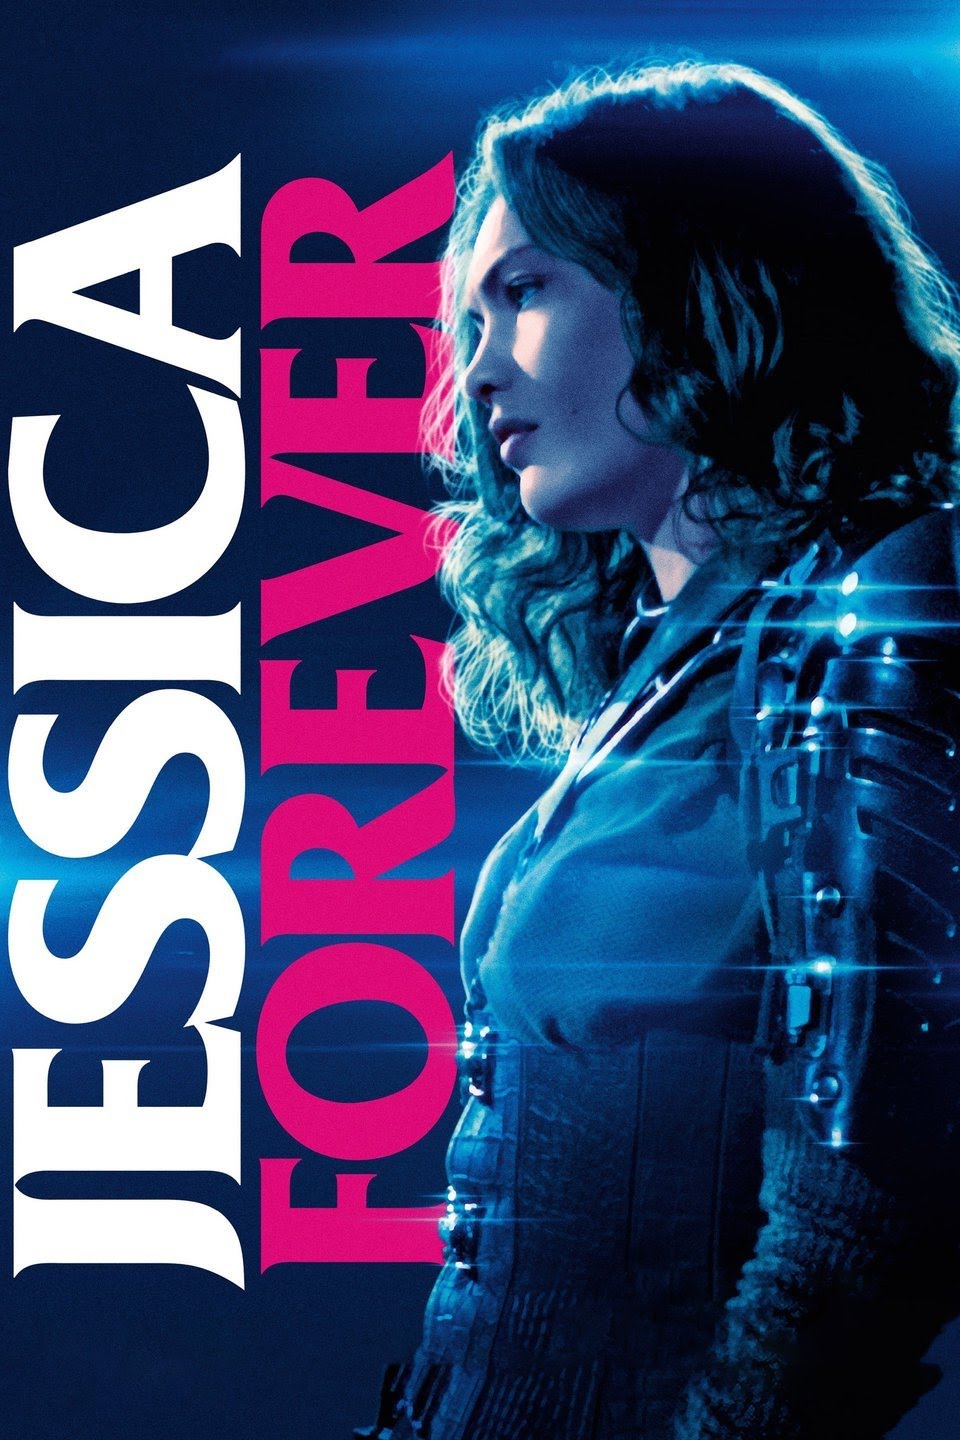 Jessica Forever (2018)